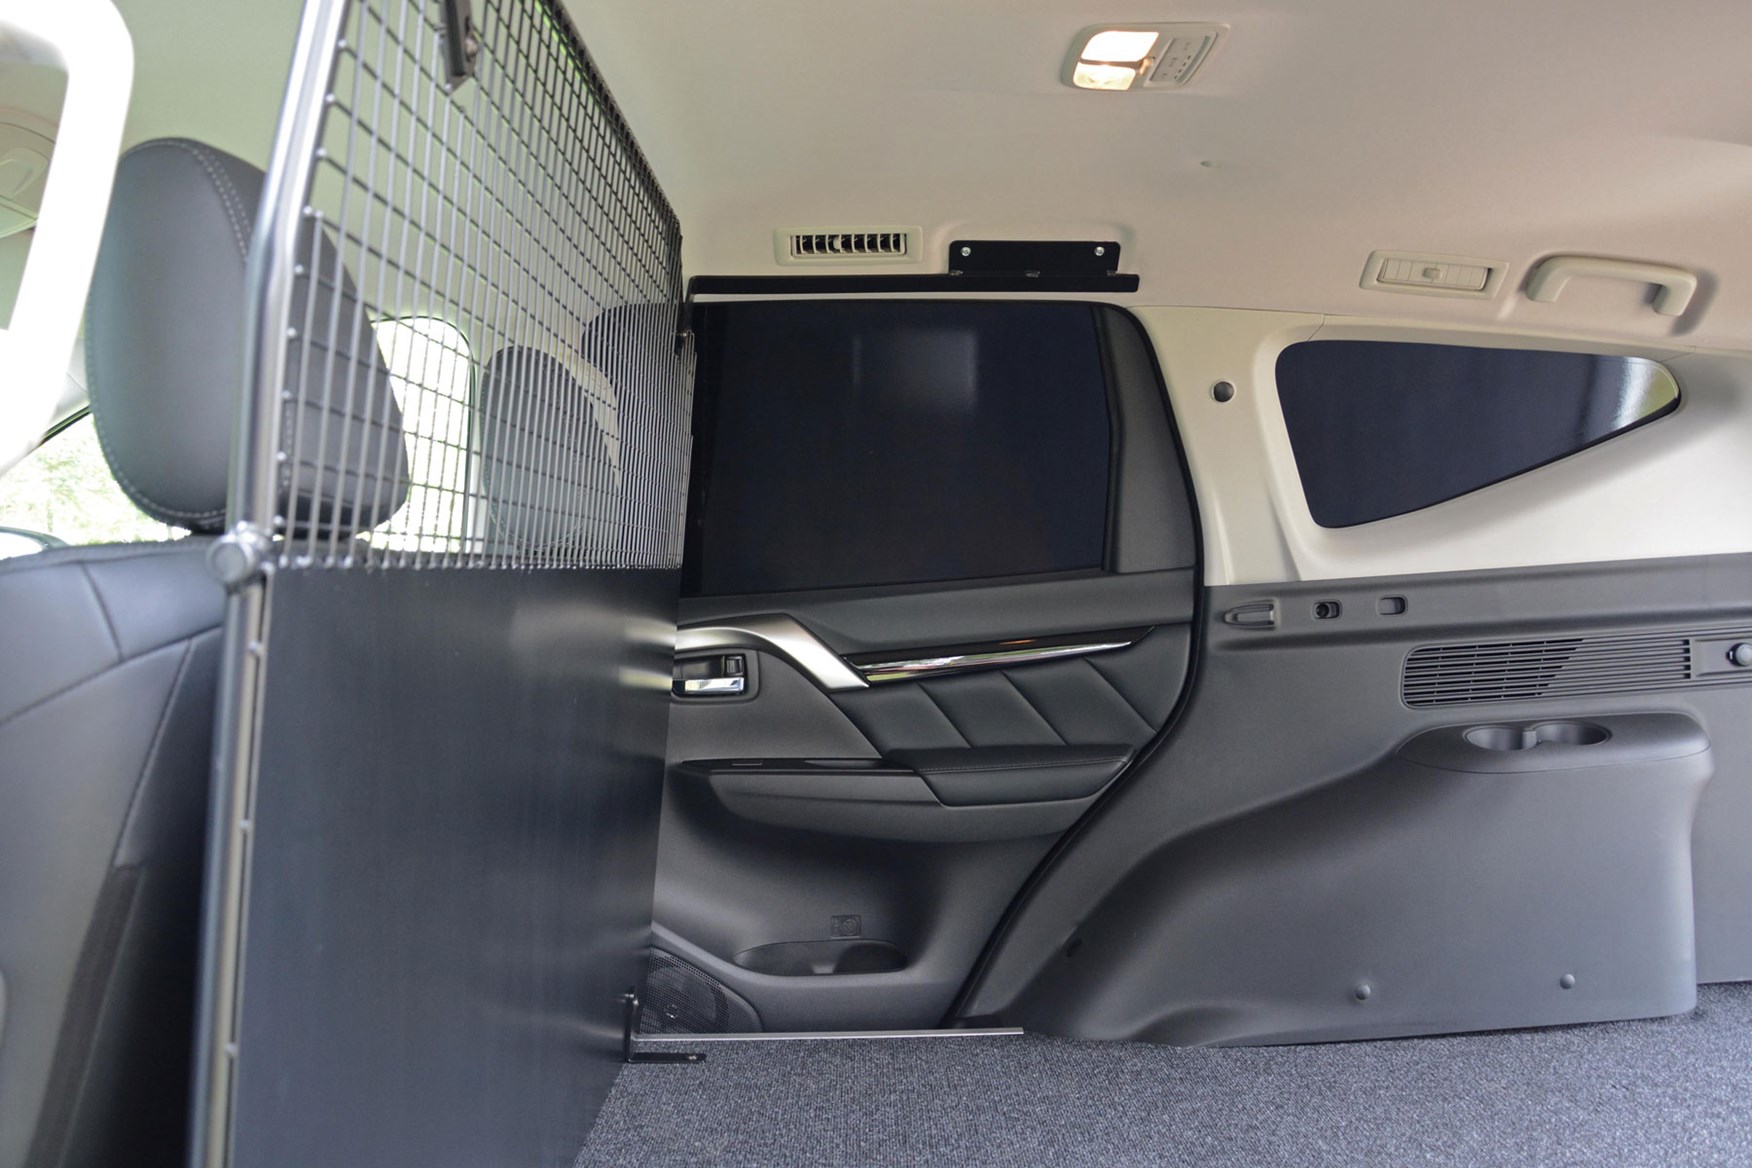 Mitsubishi Outlander Commercial 4x4 van - inside load area showing rear door trim panel from passenger car